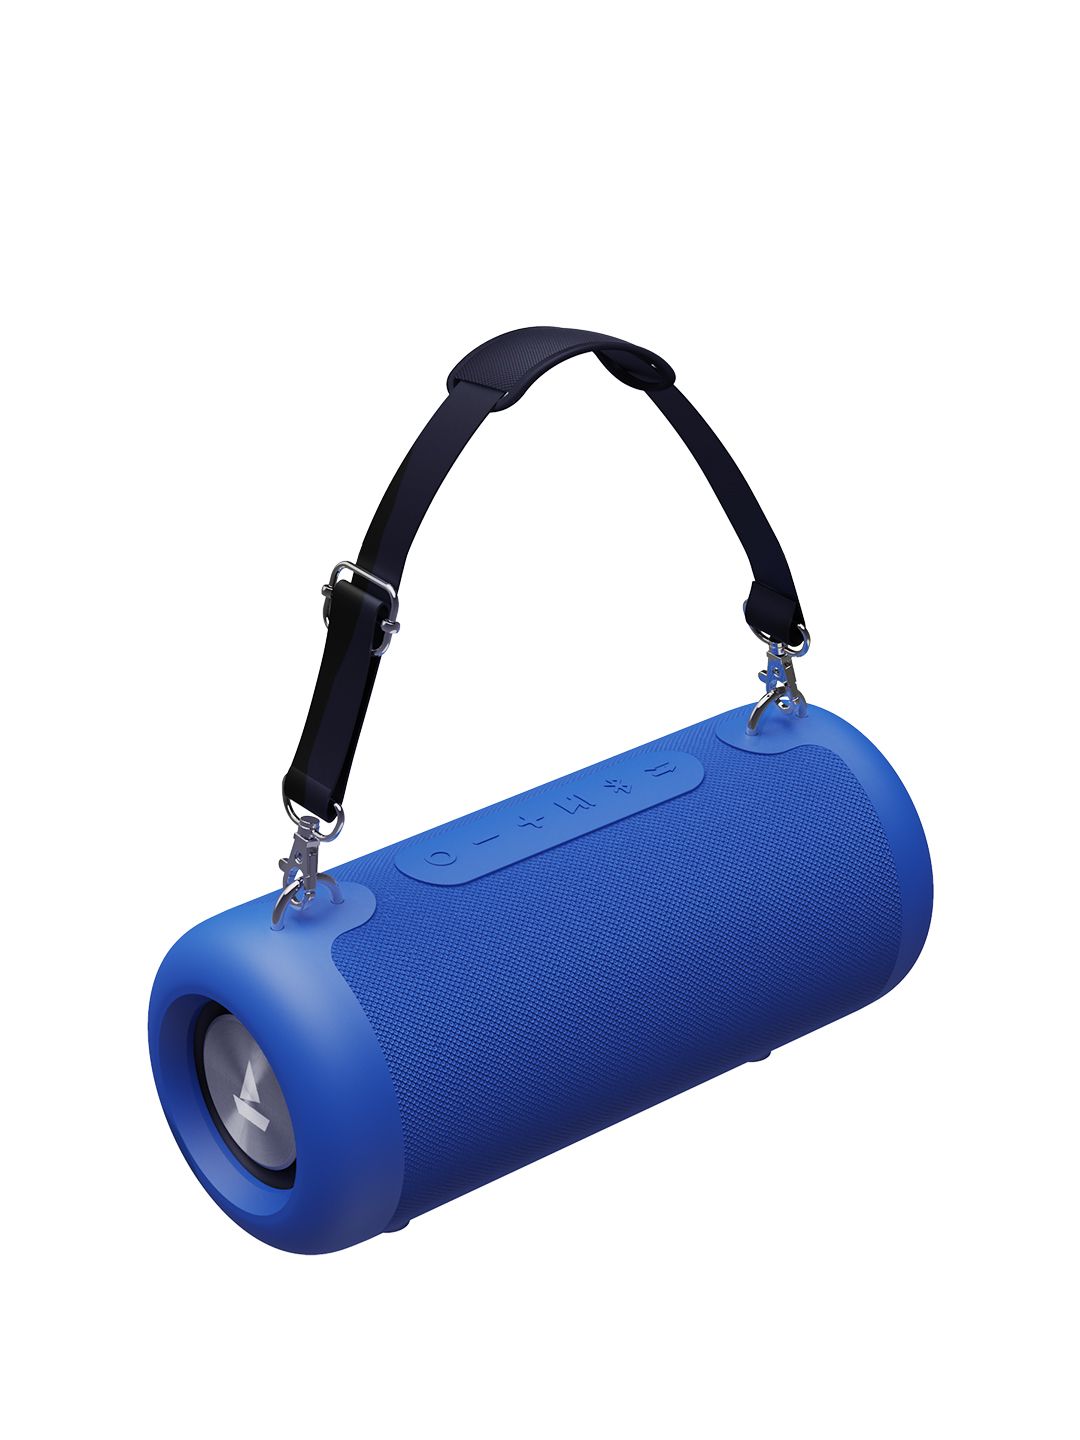 boAt Stone Blue 1350 M 30 W Bluetooth Speaker Price in India